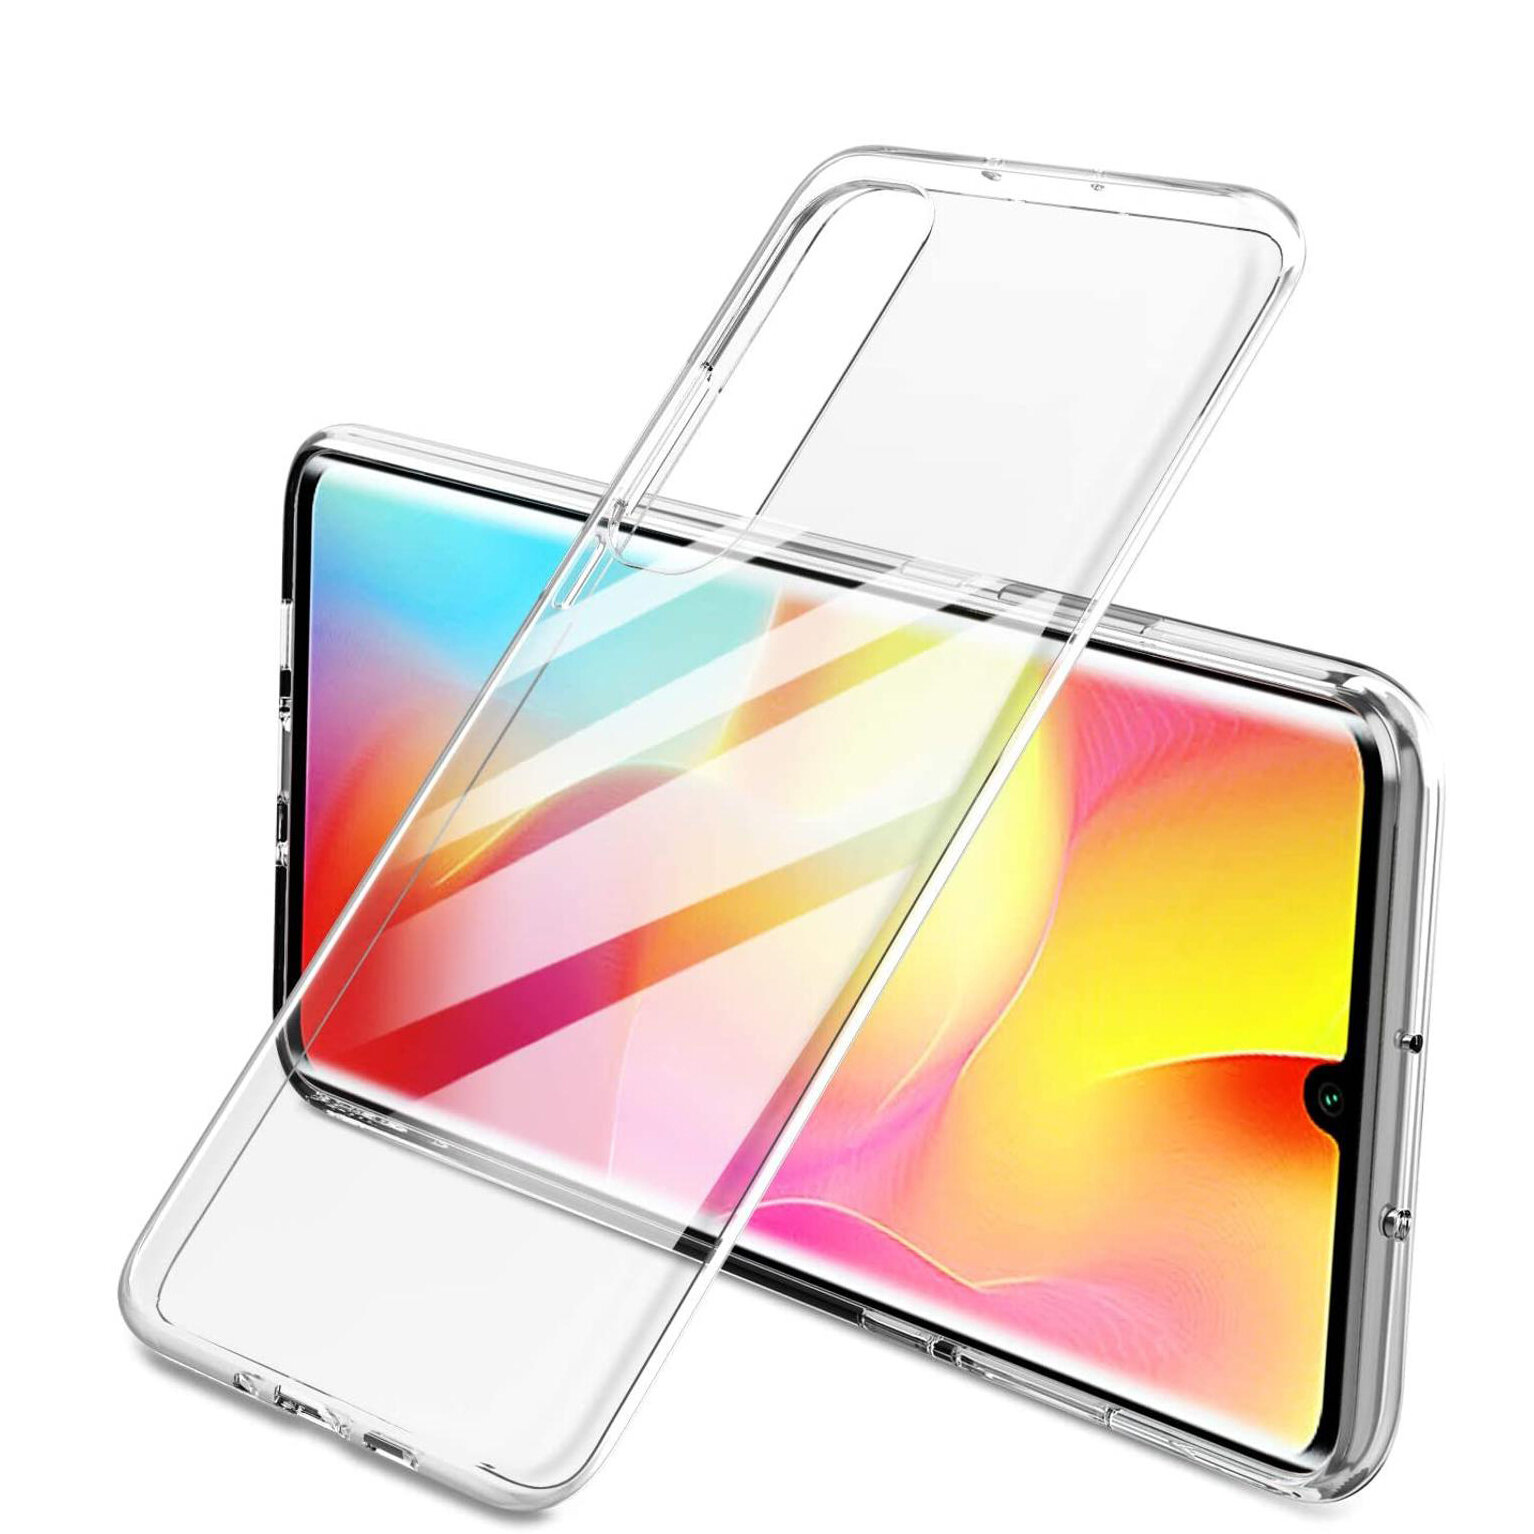 BAKEEY Crystal Clear Transparant Ultradunne Niet-geel Soft TPU Beschermhoes voor Xiaomi Mi Note 10 L